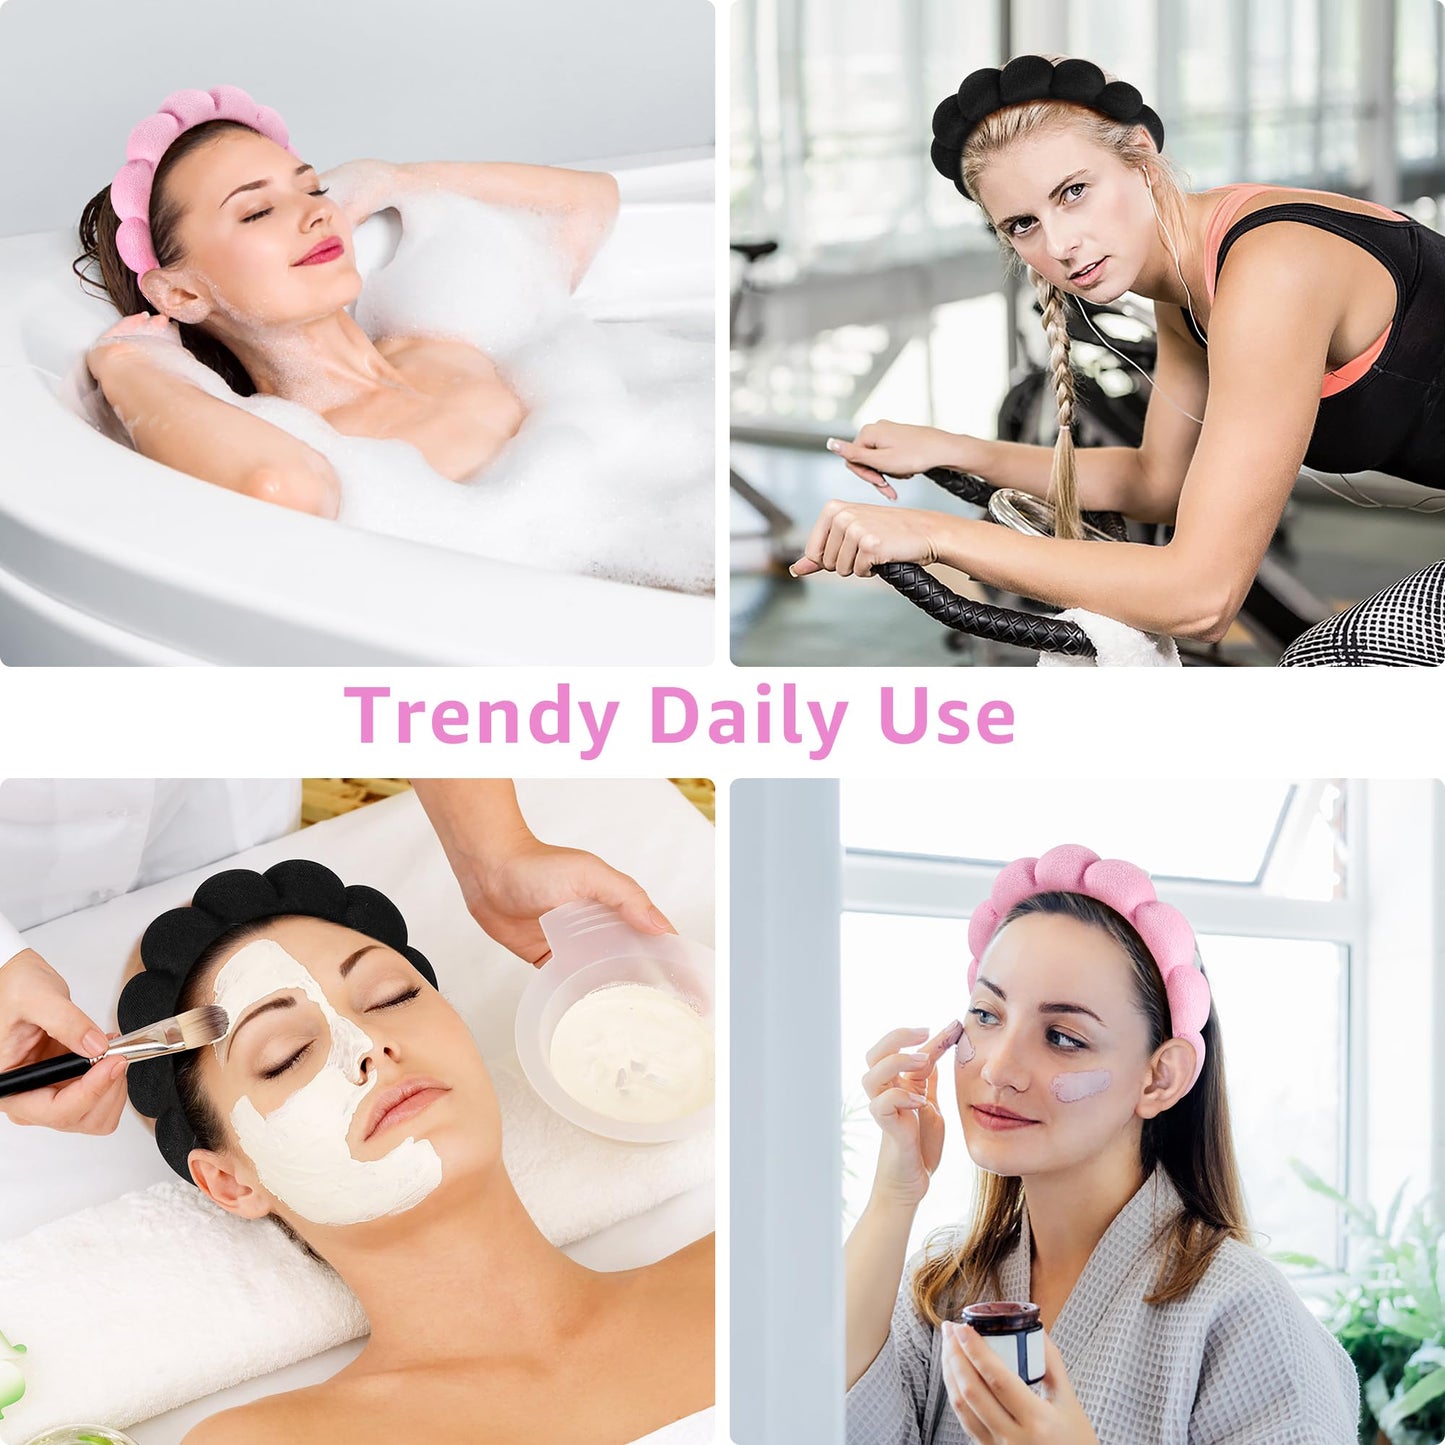 Spa Headbands for Washing Face or Facial, Set of 2 Skincare Headbands, Terry Cloth Headband Combo Pack - Puffy Makeup Headbands for Face Washing, Mask, Skin Treatment (Pink & Black)